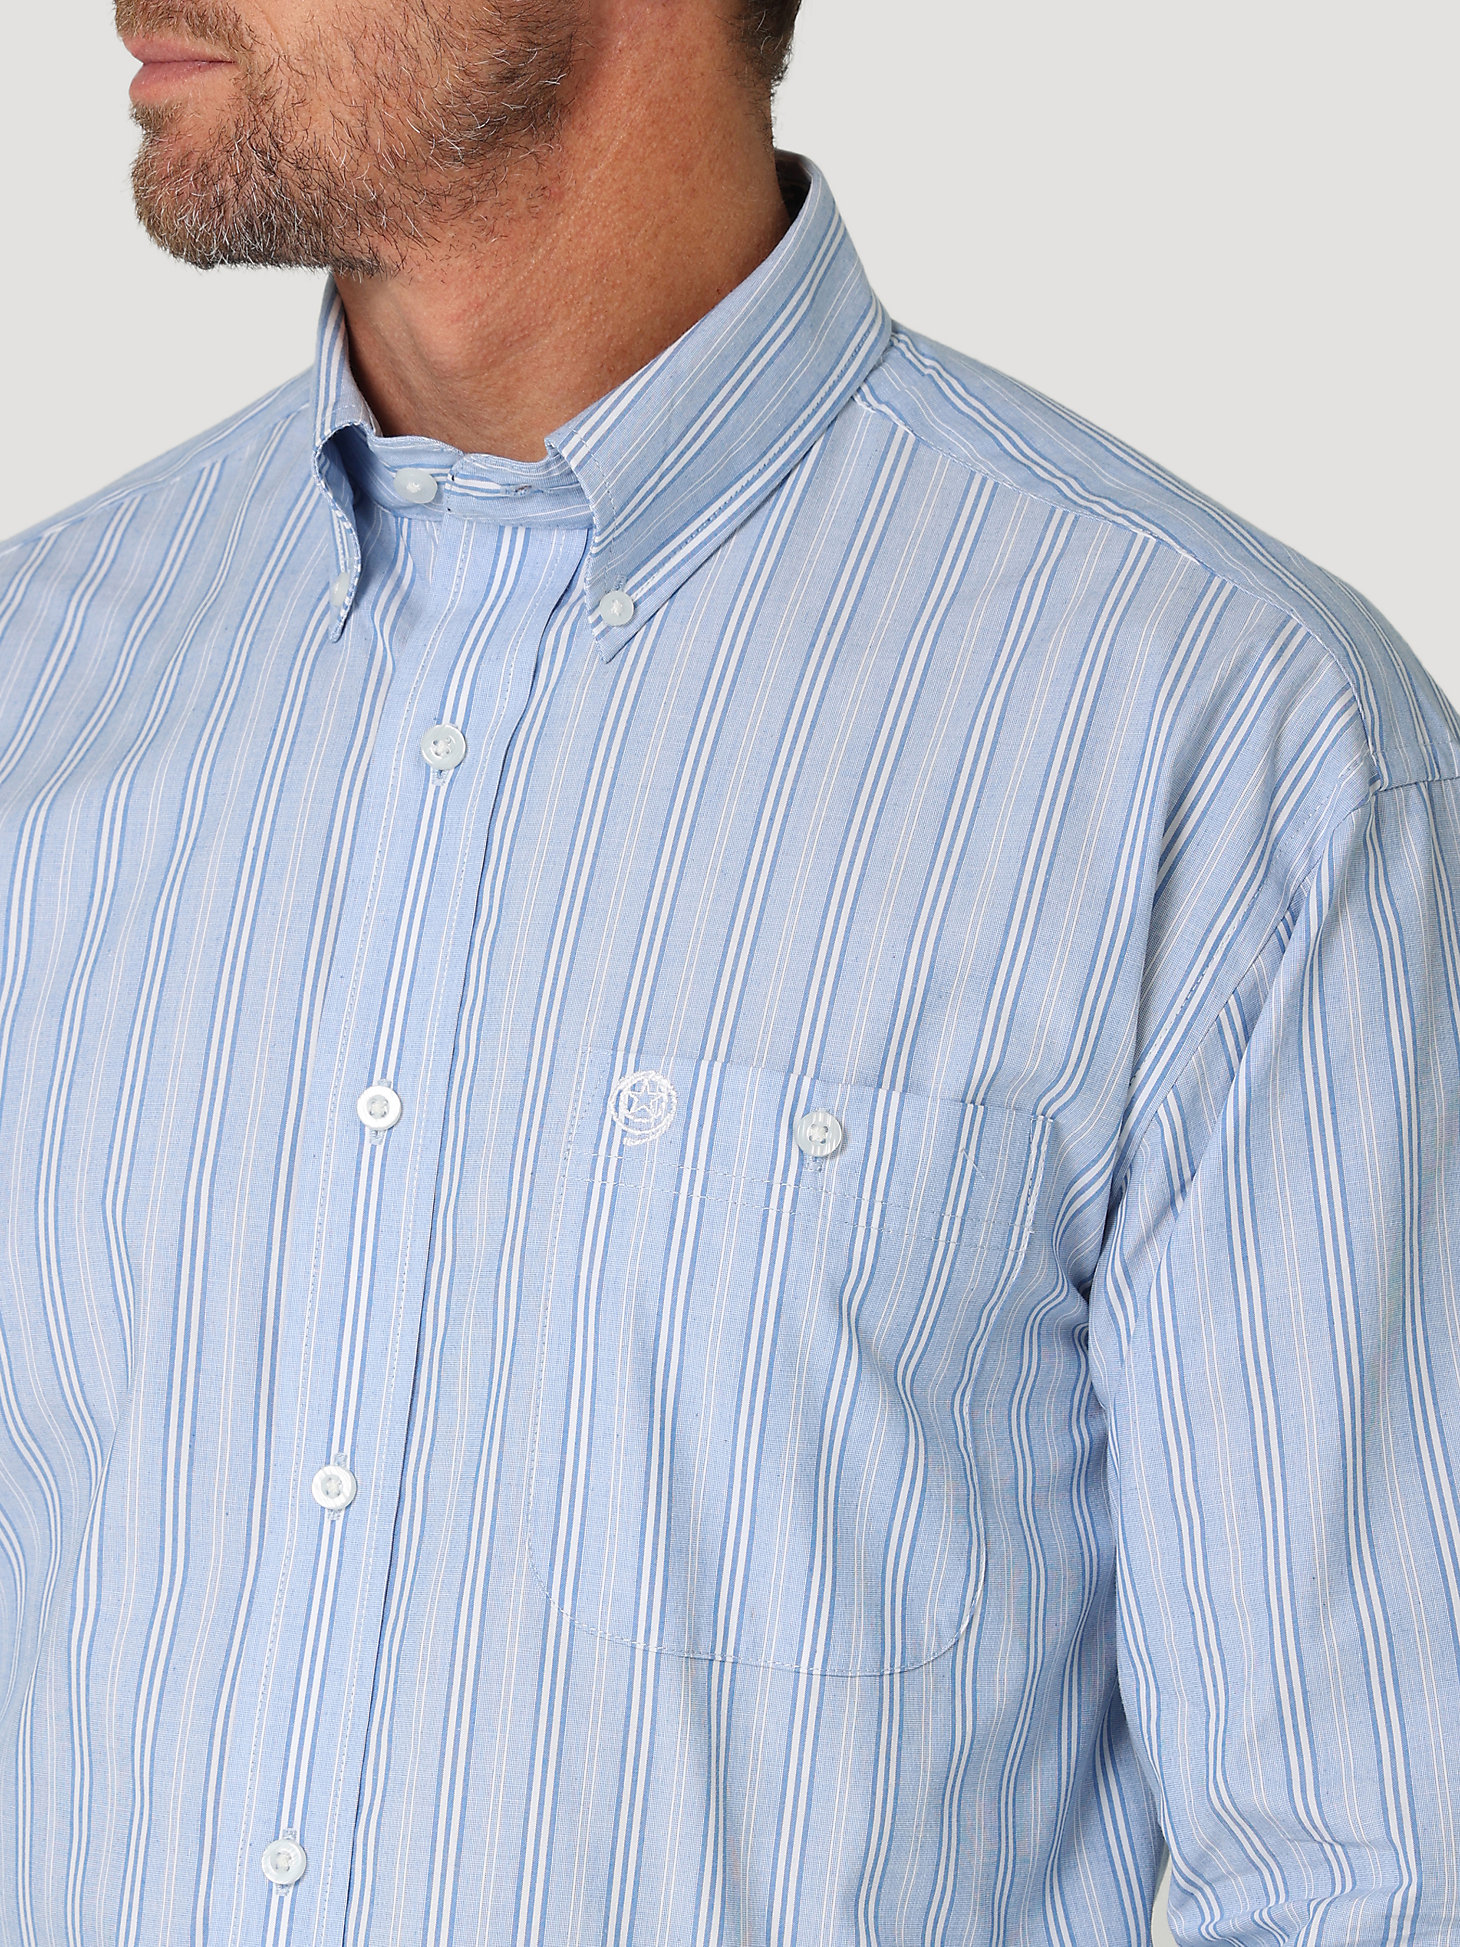 Men's George Strait Long Sleeve Button Down One Pocket Stripe Shirt in Blue Tri alternative view 2